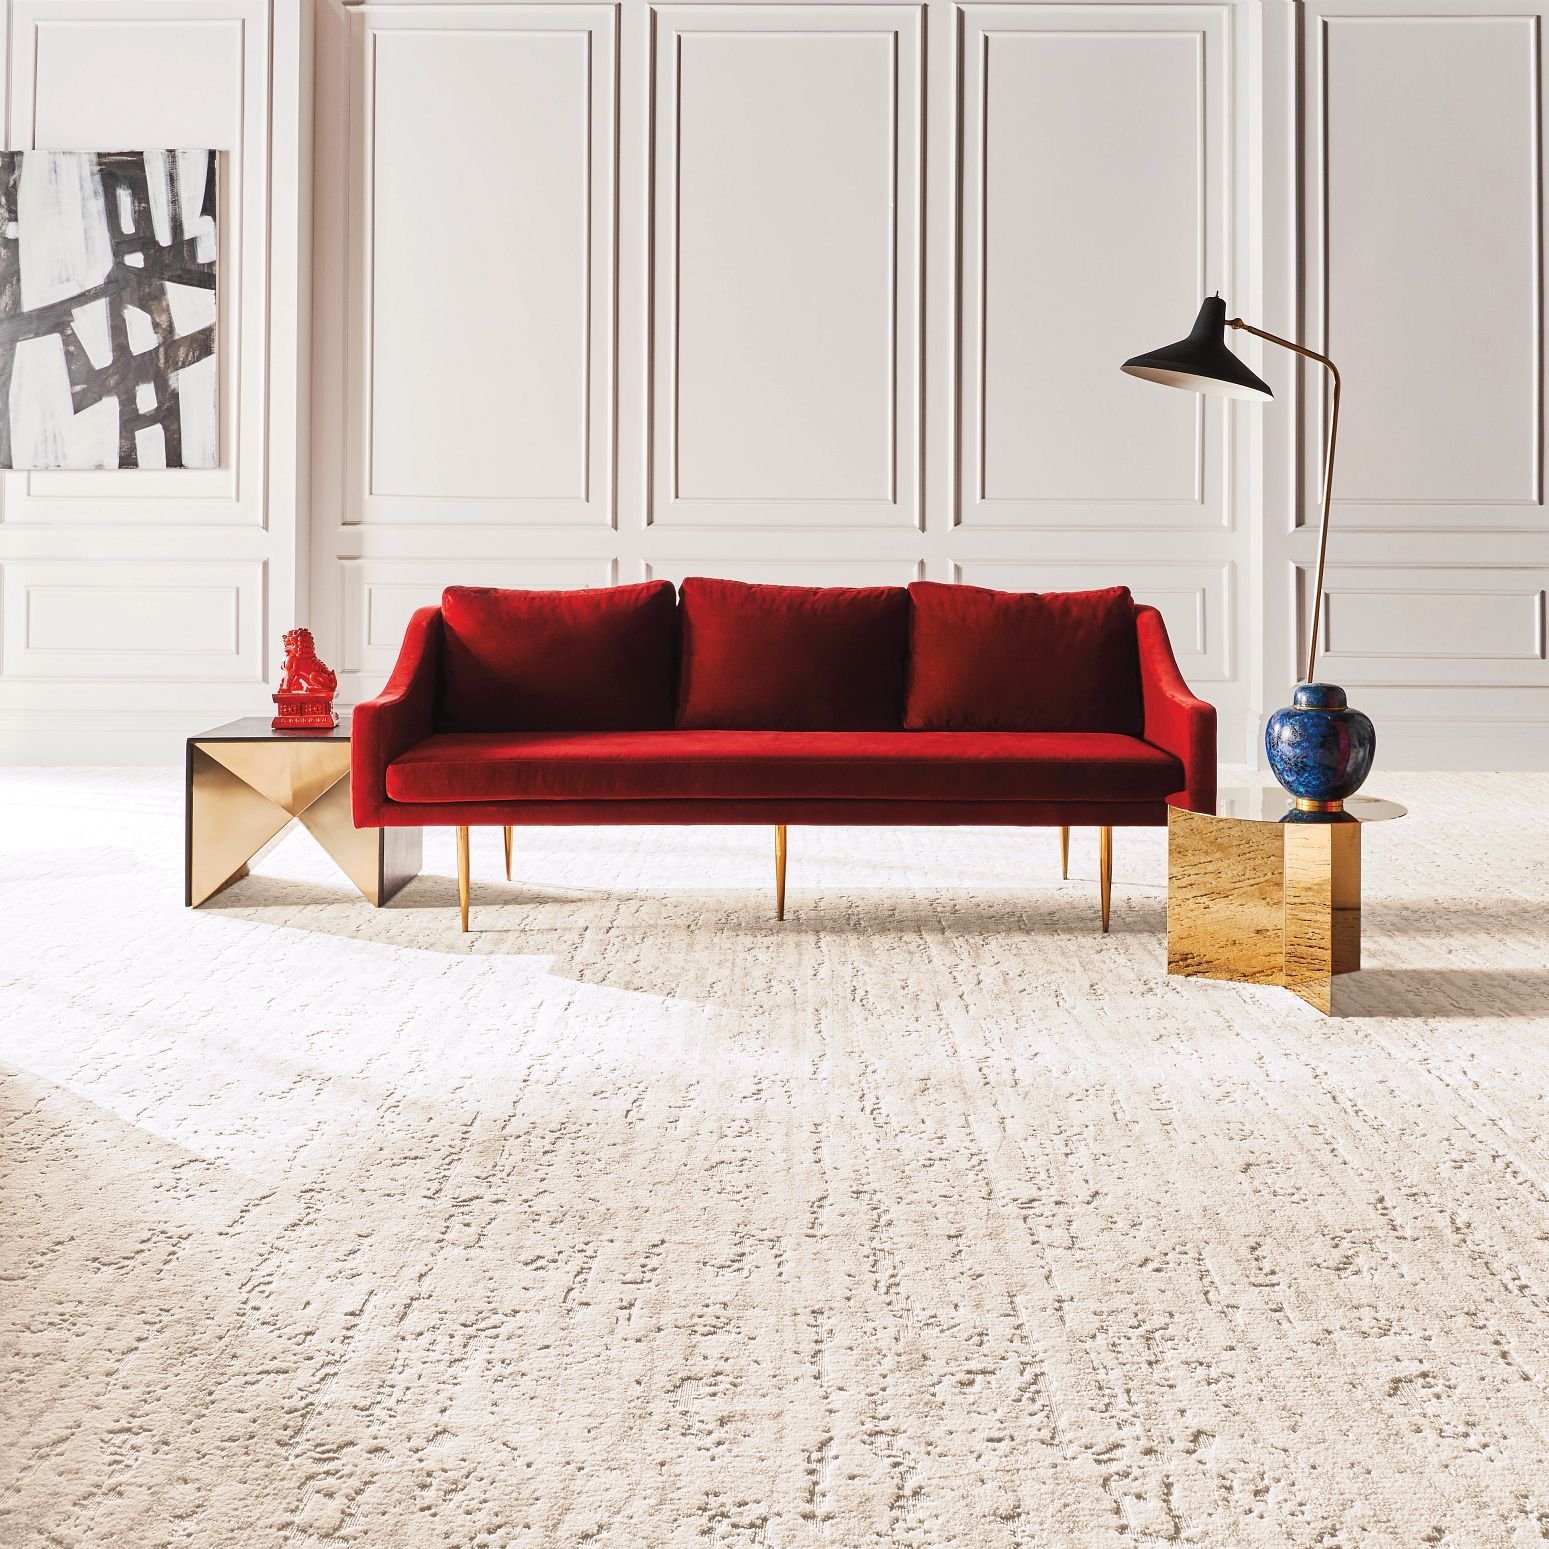 red sofa on carpet - contractorscarpetsource